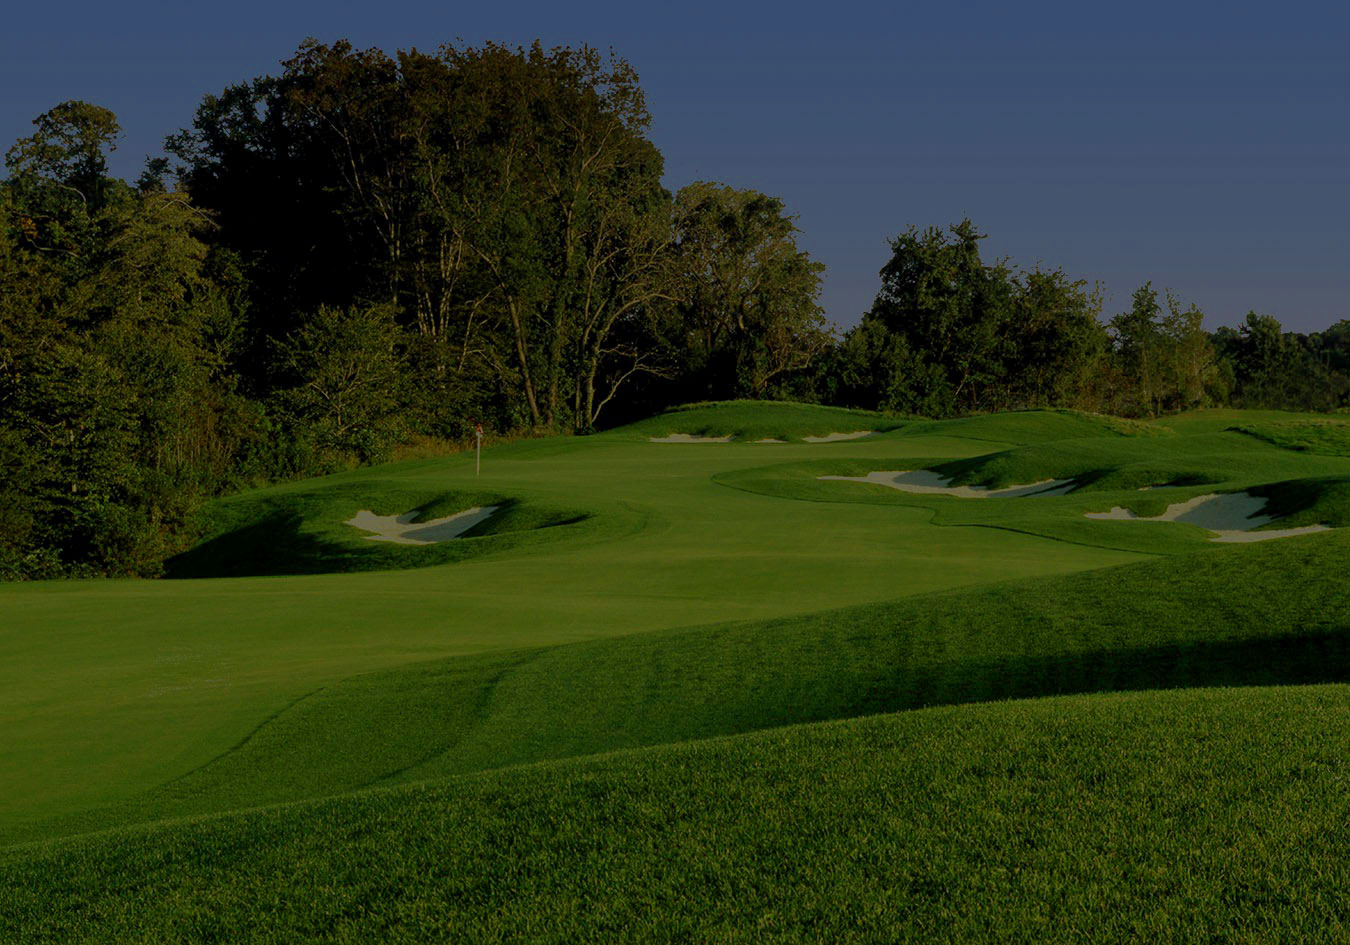 golf course with dark overlay